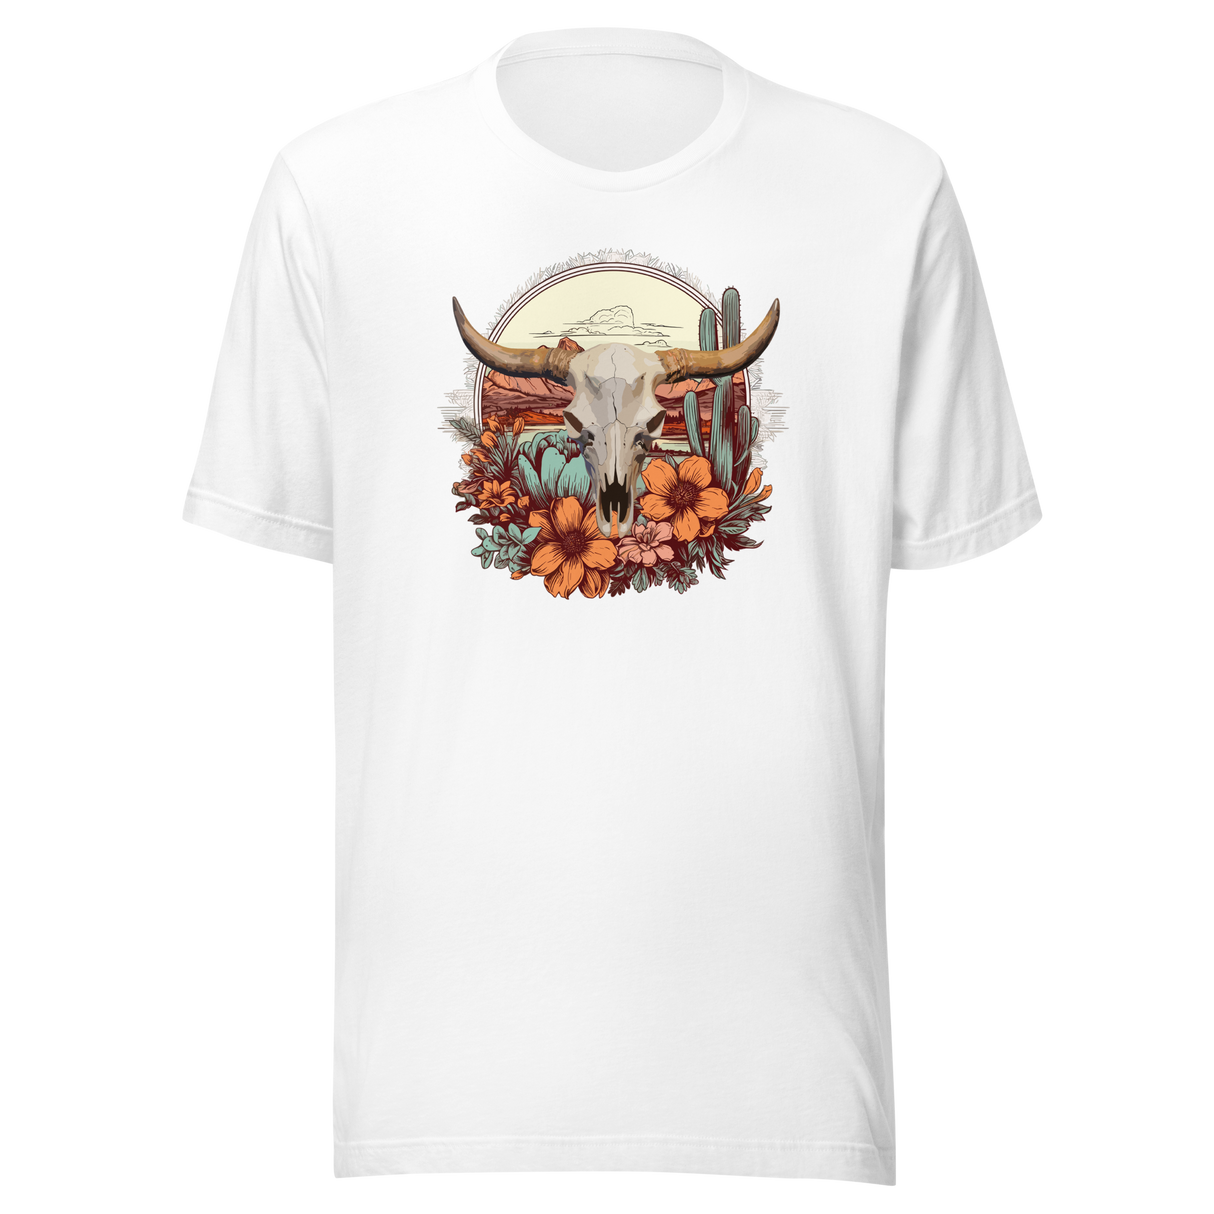 desert-scene-with-skull-and-flowers-mountains-outdoors-tee-desert-t-shirt-outdoors-tee-t-shirt-t-shirt-women-tee#color_white